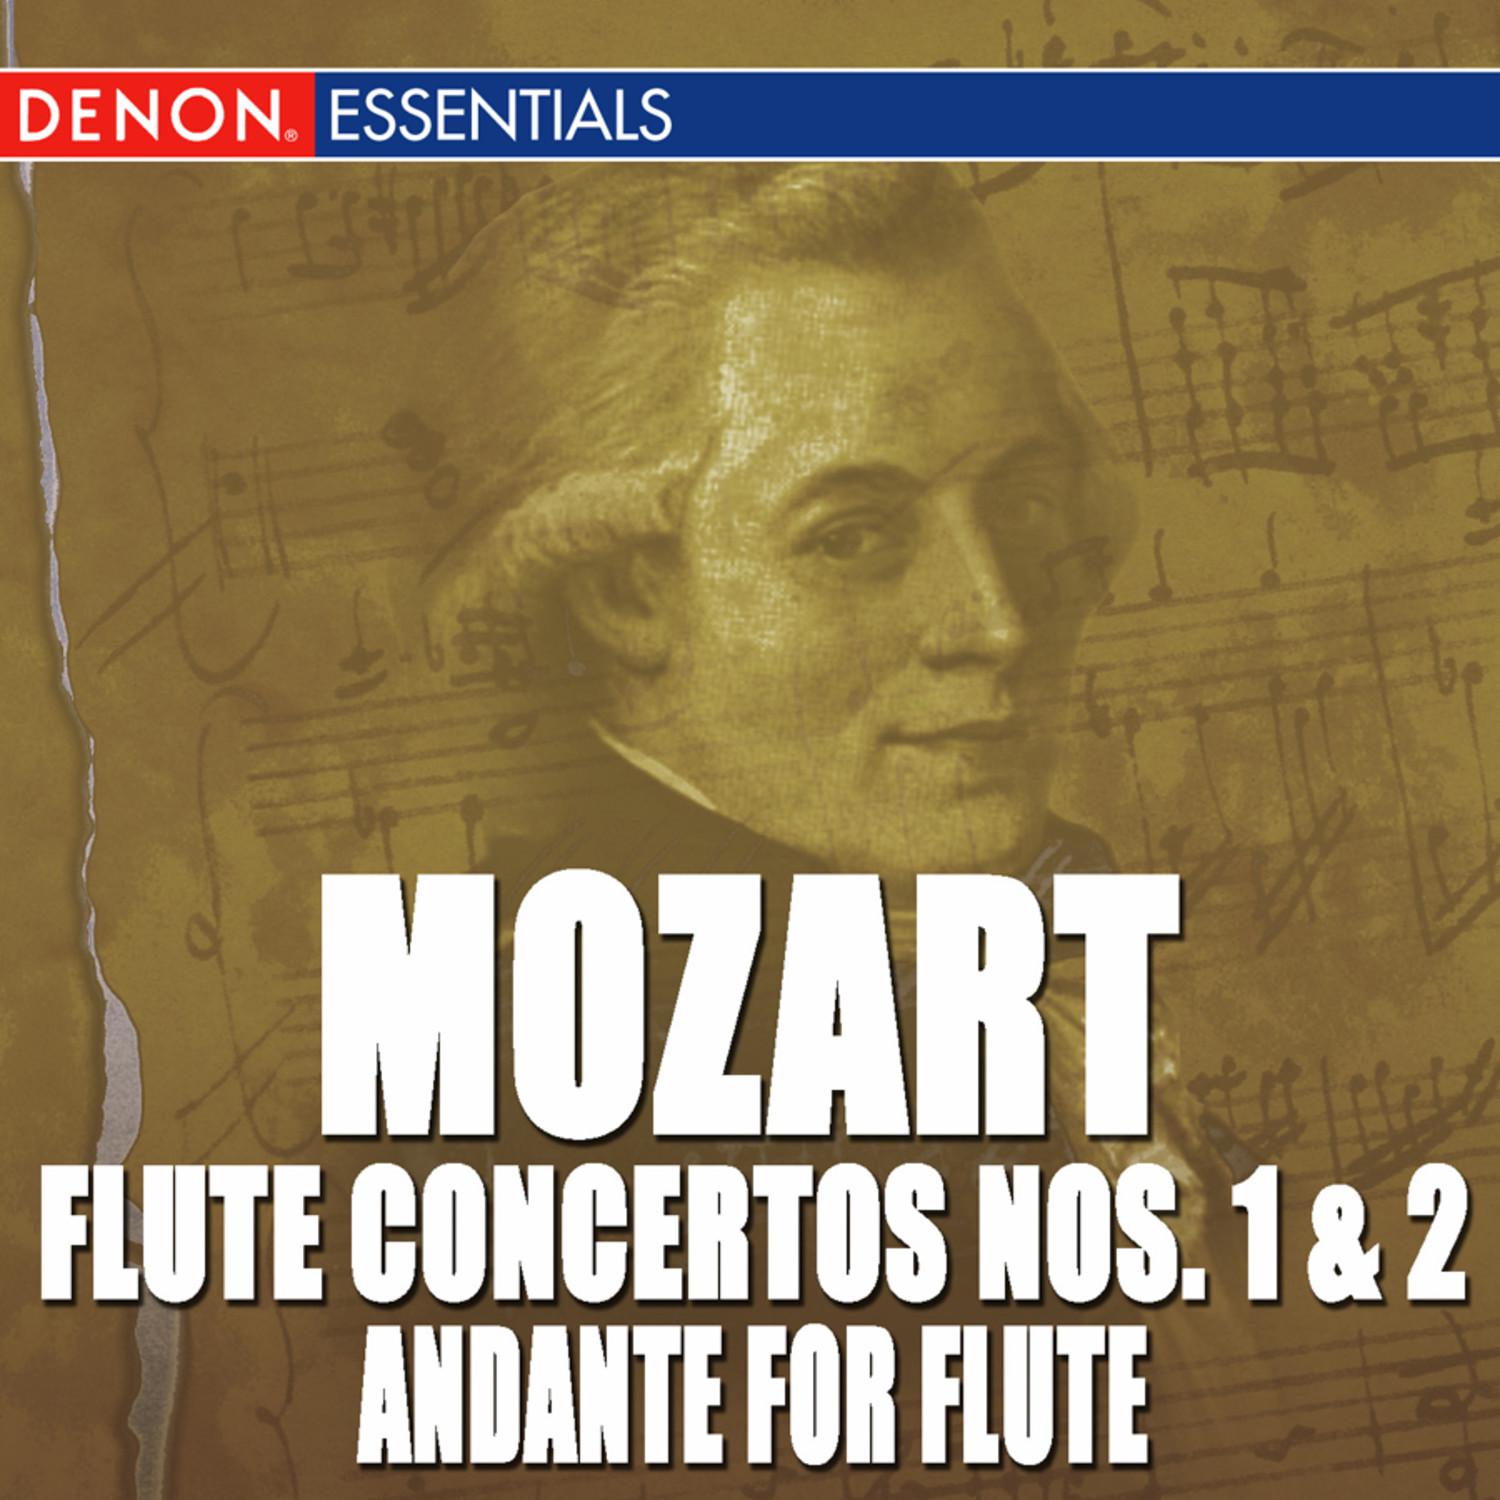 Flute Concerto No. 2 in D Major, KV 314: I. Allegro aperto